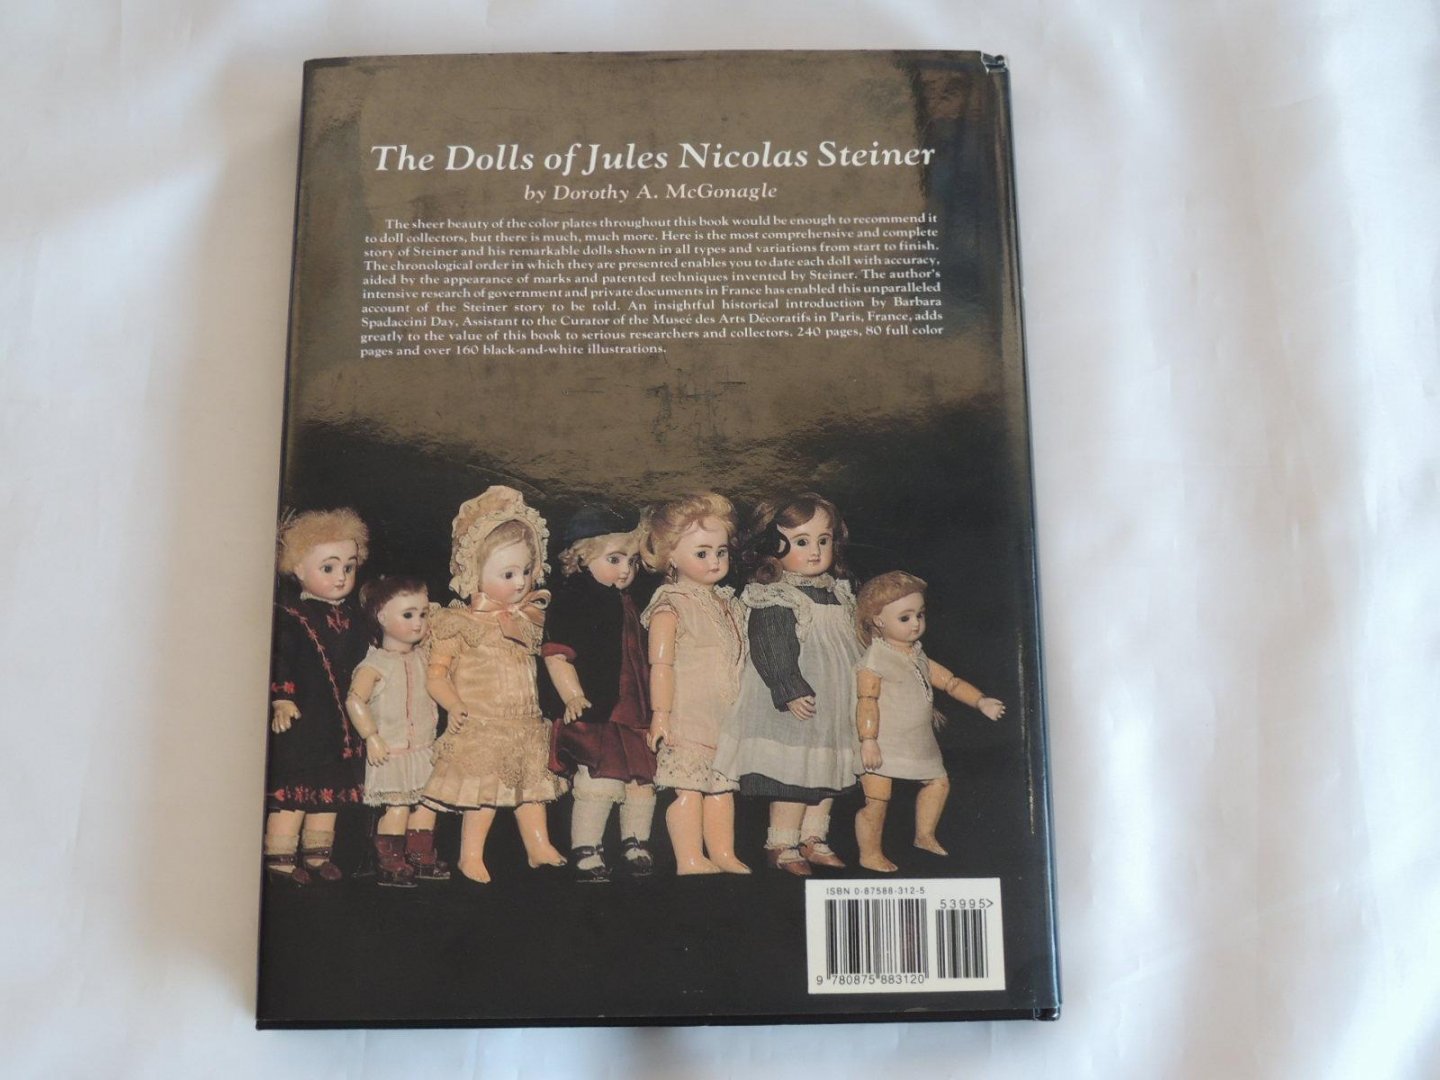 Dorothy A McGonagle Mc Gonagle - Barbara Spadaccini Day - The dolls of Jules Nicolas Steiner